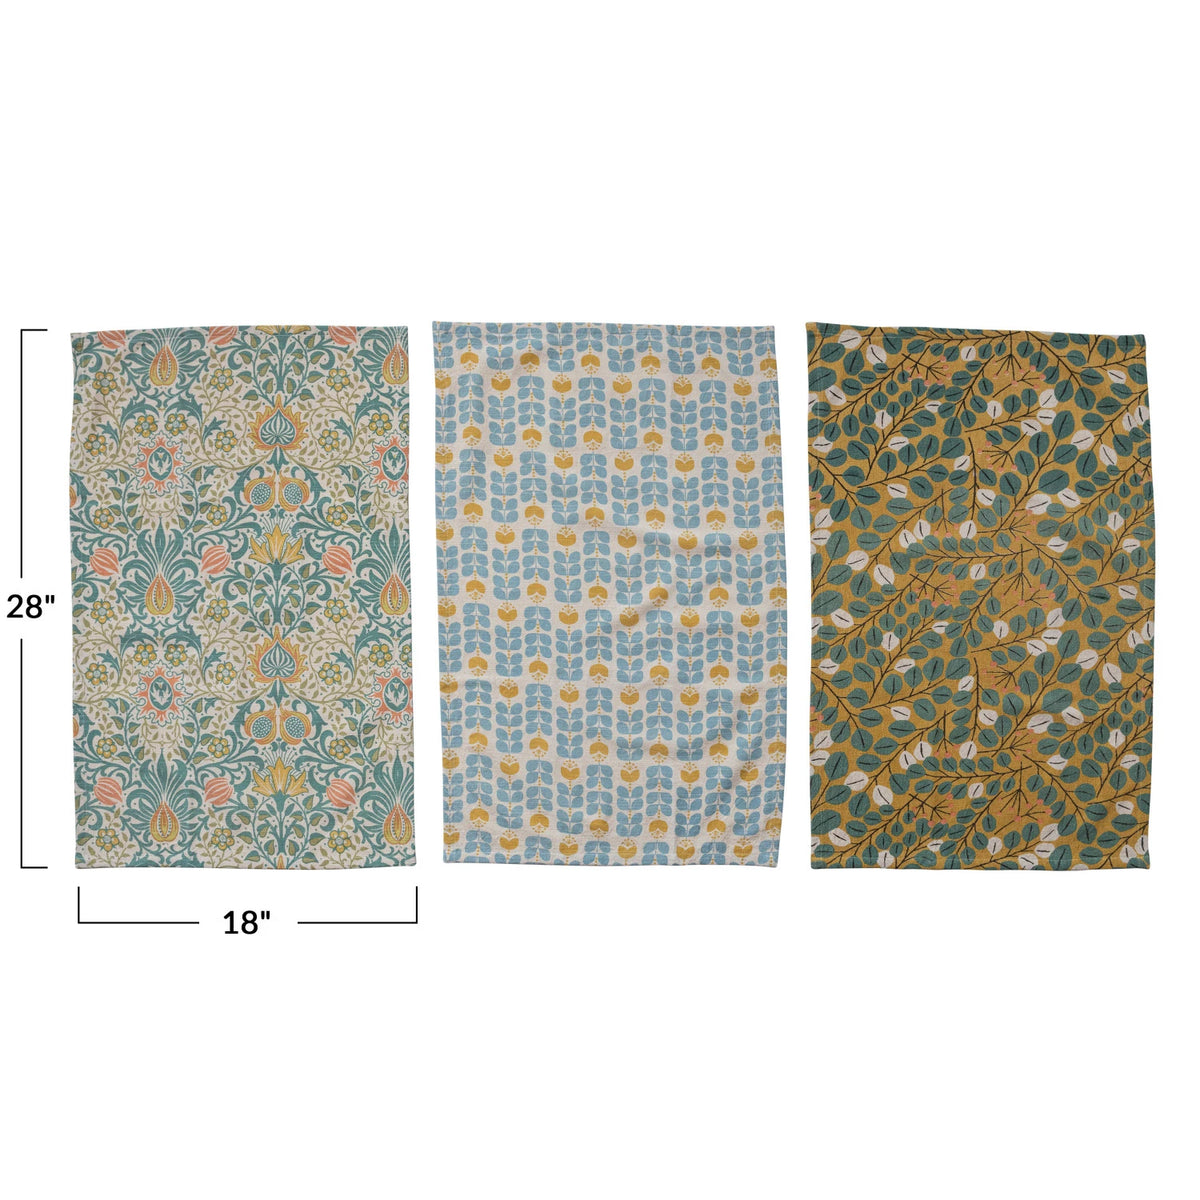 Woven Cotton Printed Tea Towel w/ Botanical Pattern